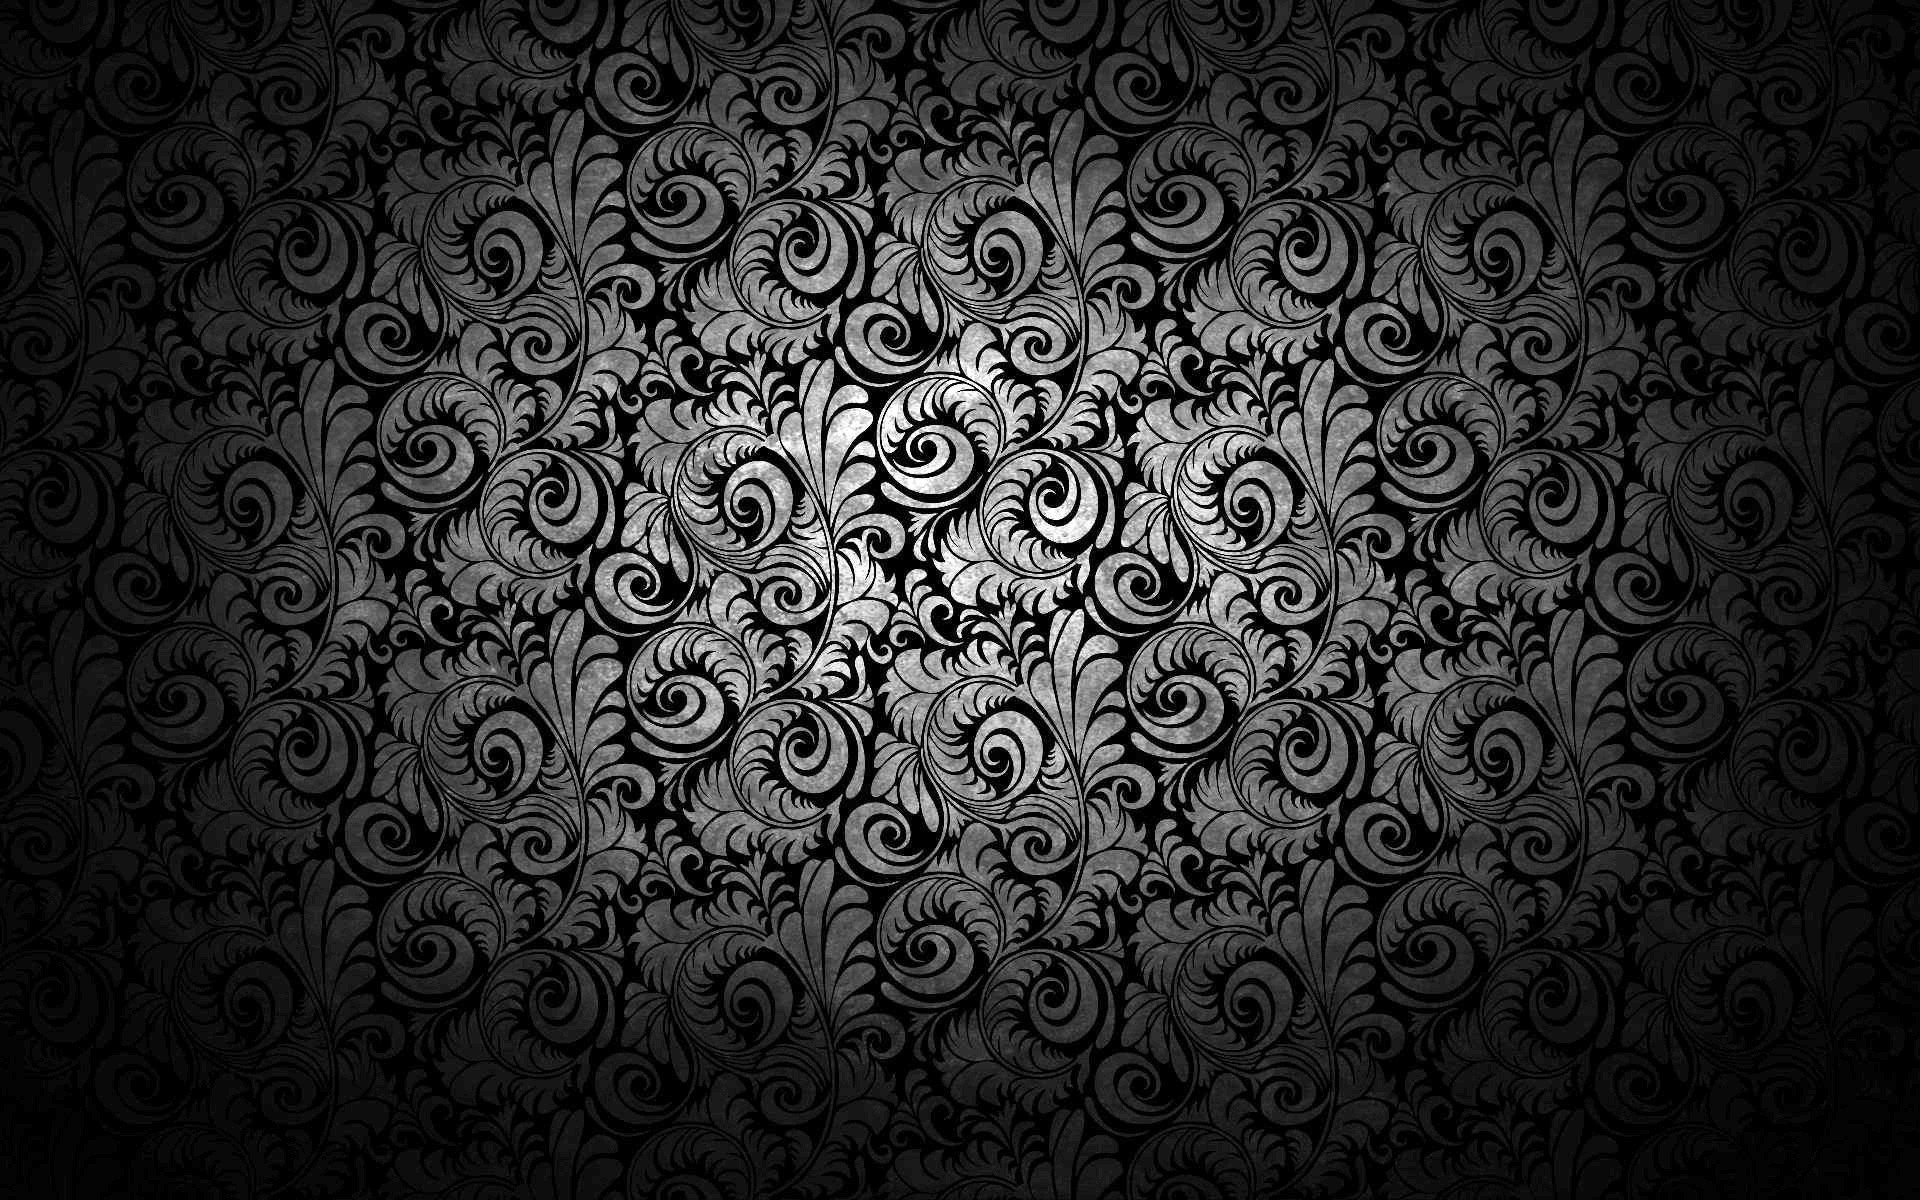 1920x1200 Dark Pattern Wallpaper High Definition for Desktop  px 984.23 KB |  VL - blackboard | Pinterest | Wallpaper, Artsy and Doodles